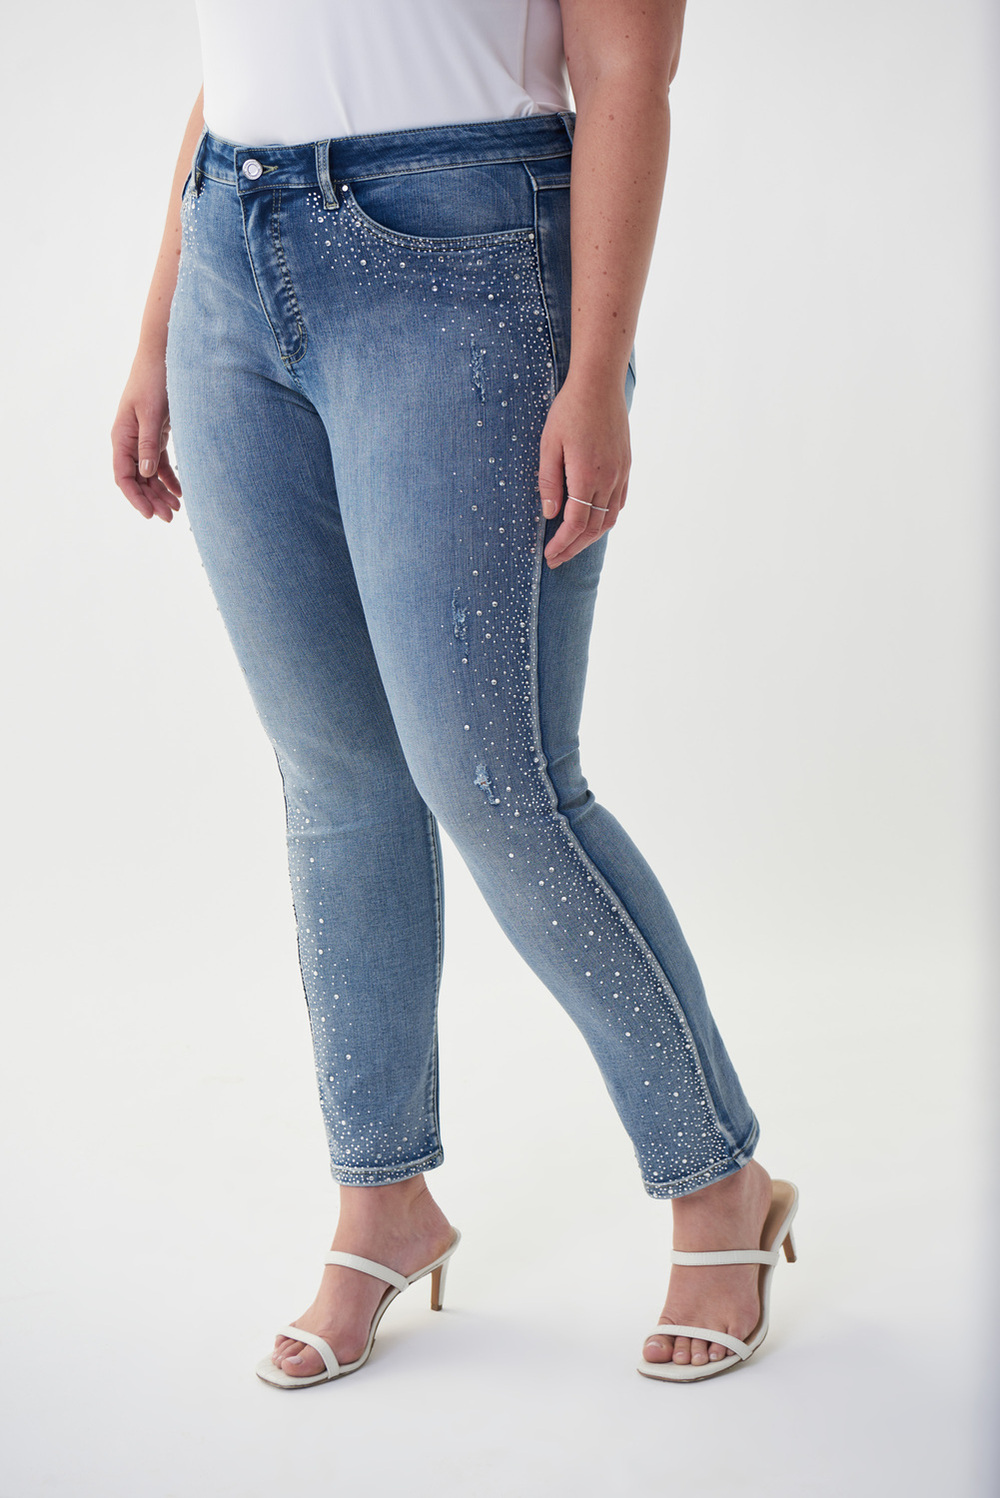 Joseph Ribkoff Jeans avec strass modèle 222921. Denim Bleu Pâle